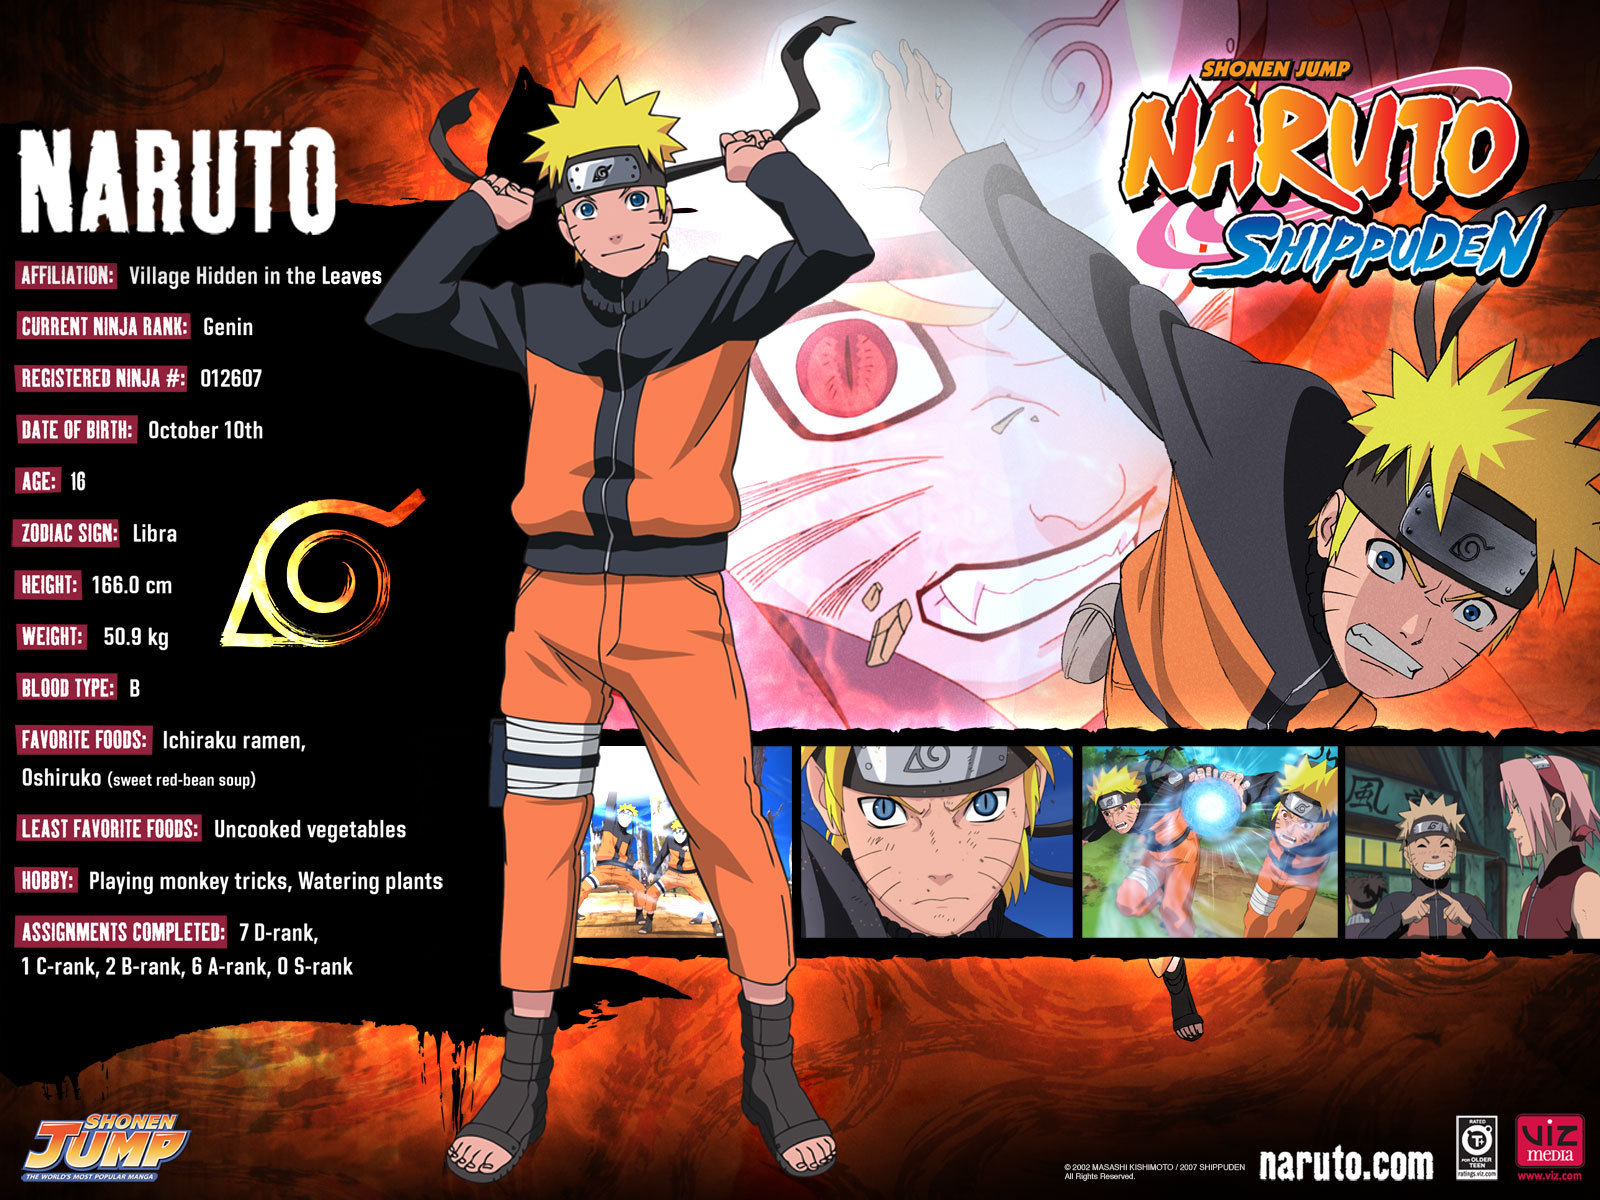 Download Naruto Shippuden Episode 299 Subtitle Bahasa Indonesia